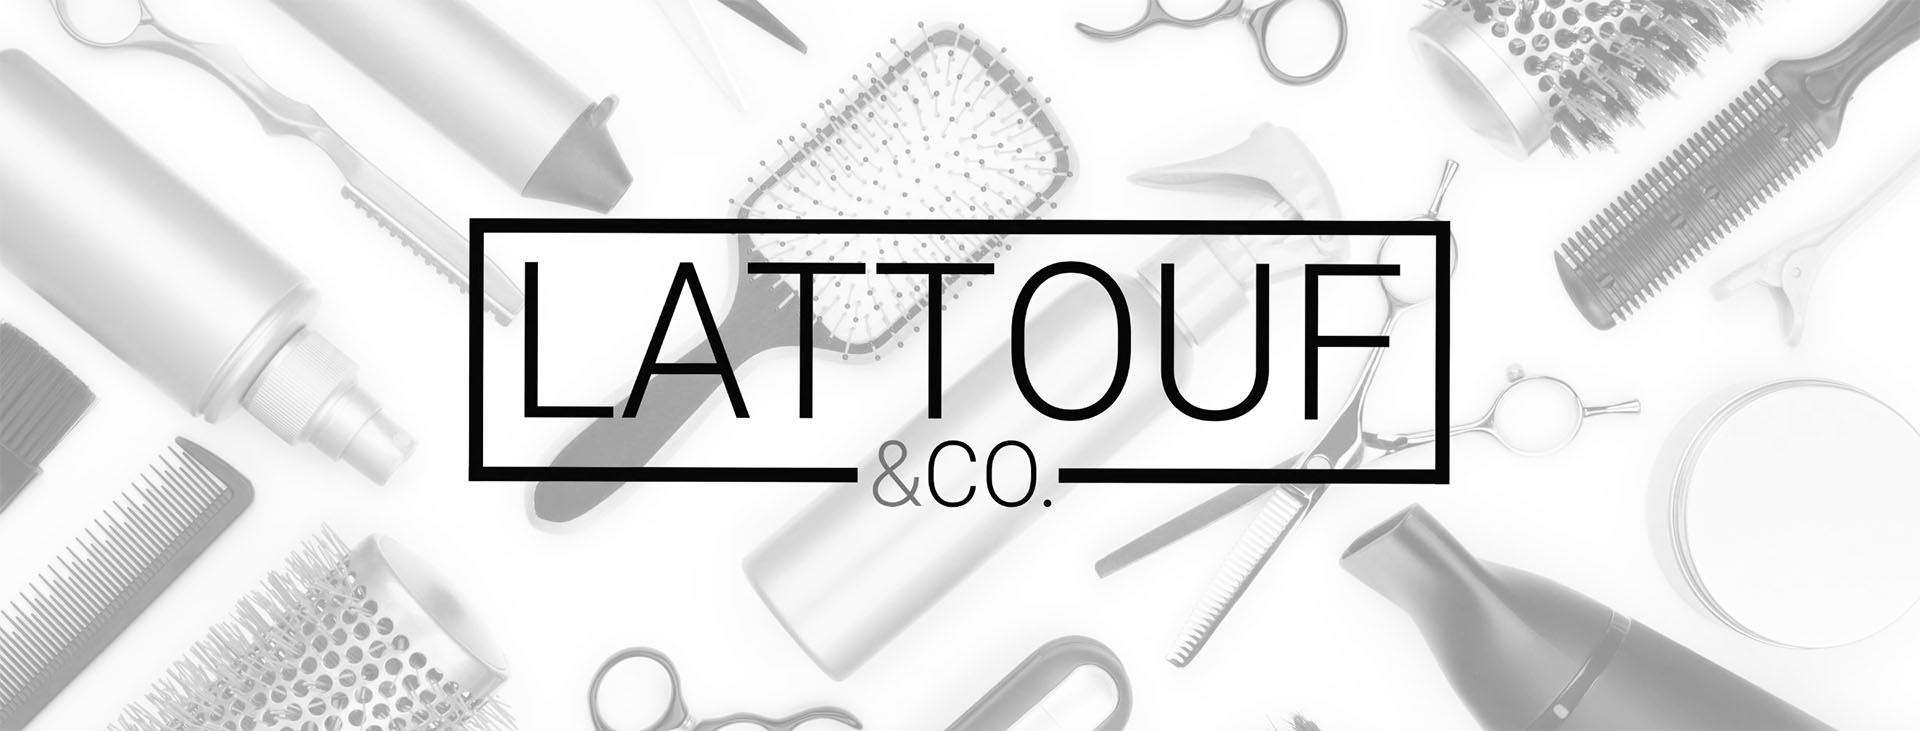 Lattouf & Co